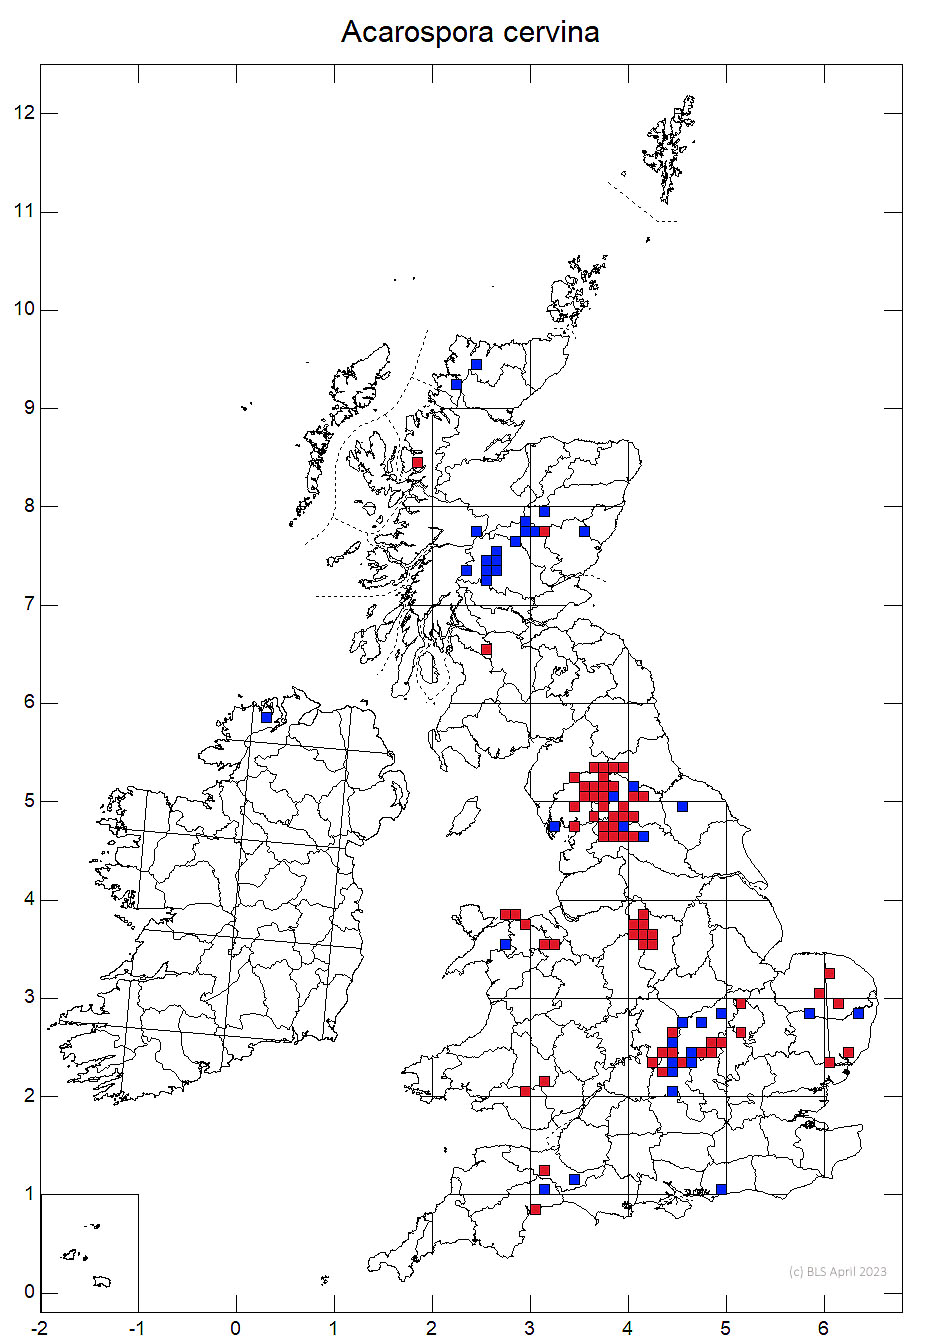 Acarospora cervina 10km sq distribution map